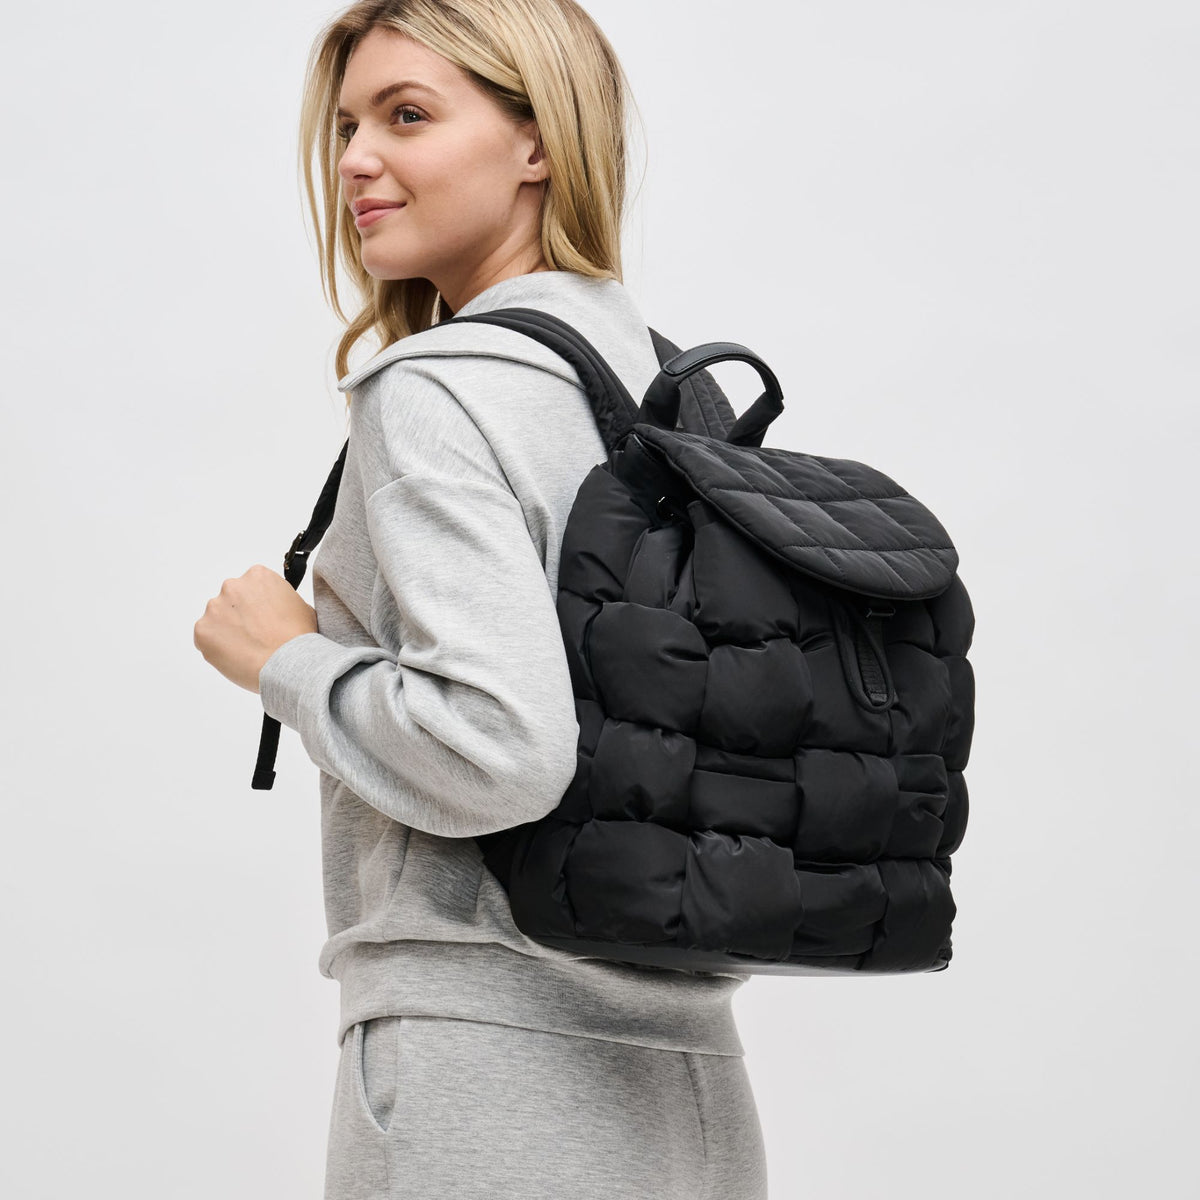 Woman wearing Black Sol and Selene Perception Backpack 841764107730 View 2 | Black